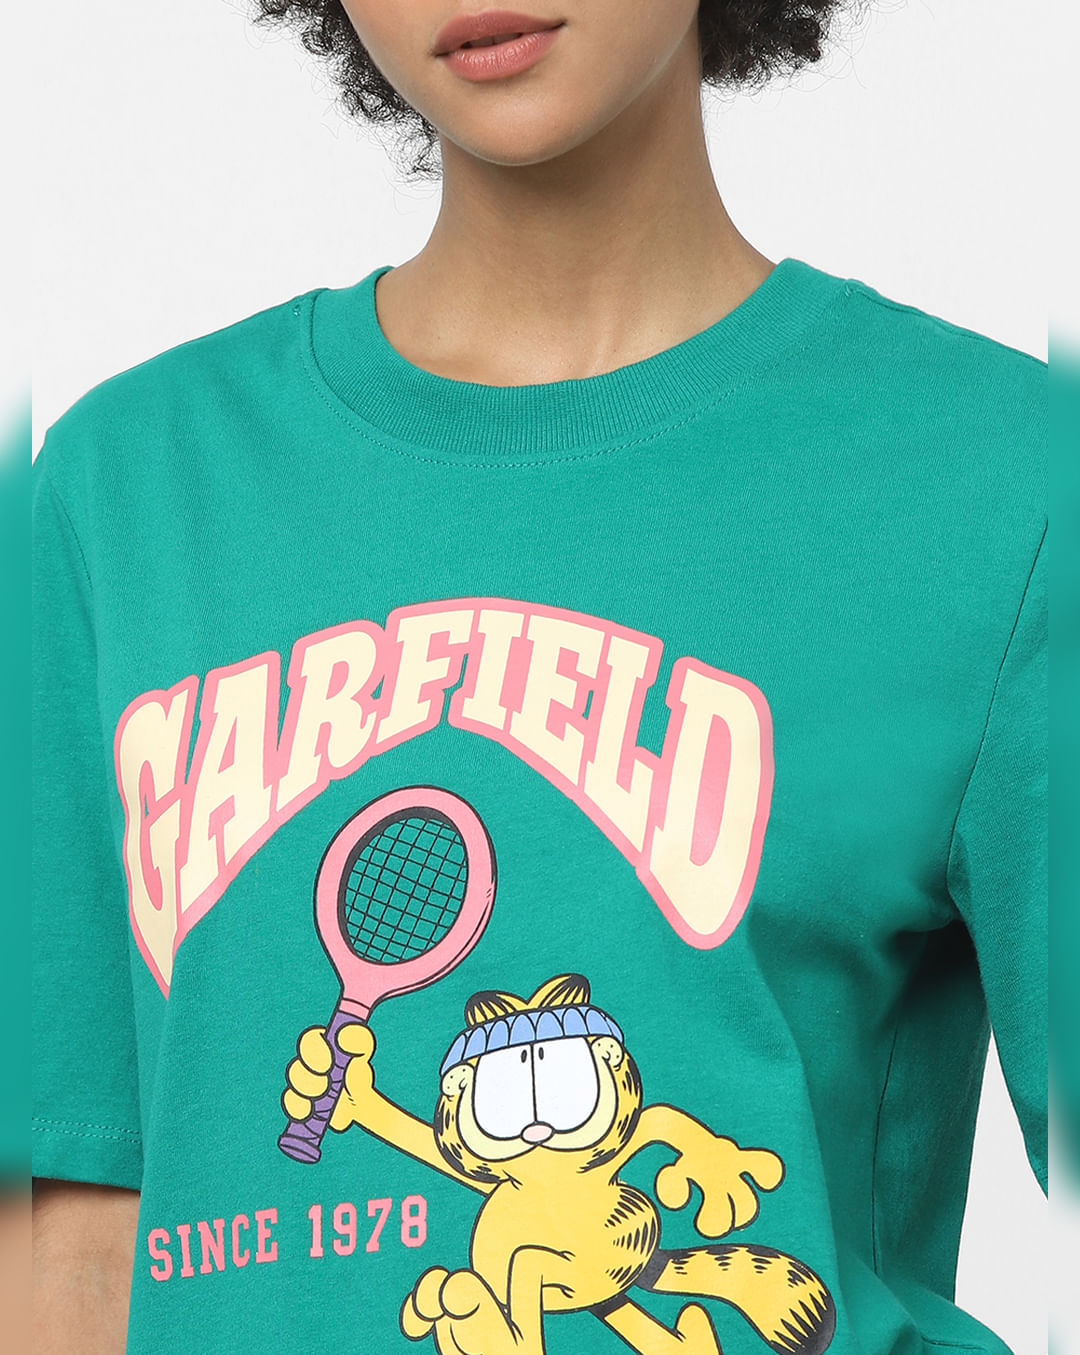 Garfield - Four Square - T-Shirt